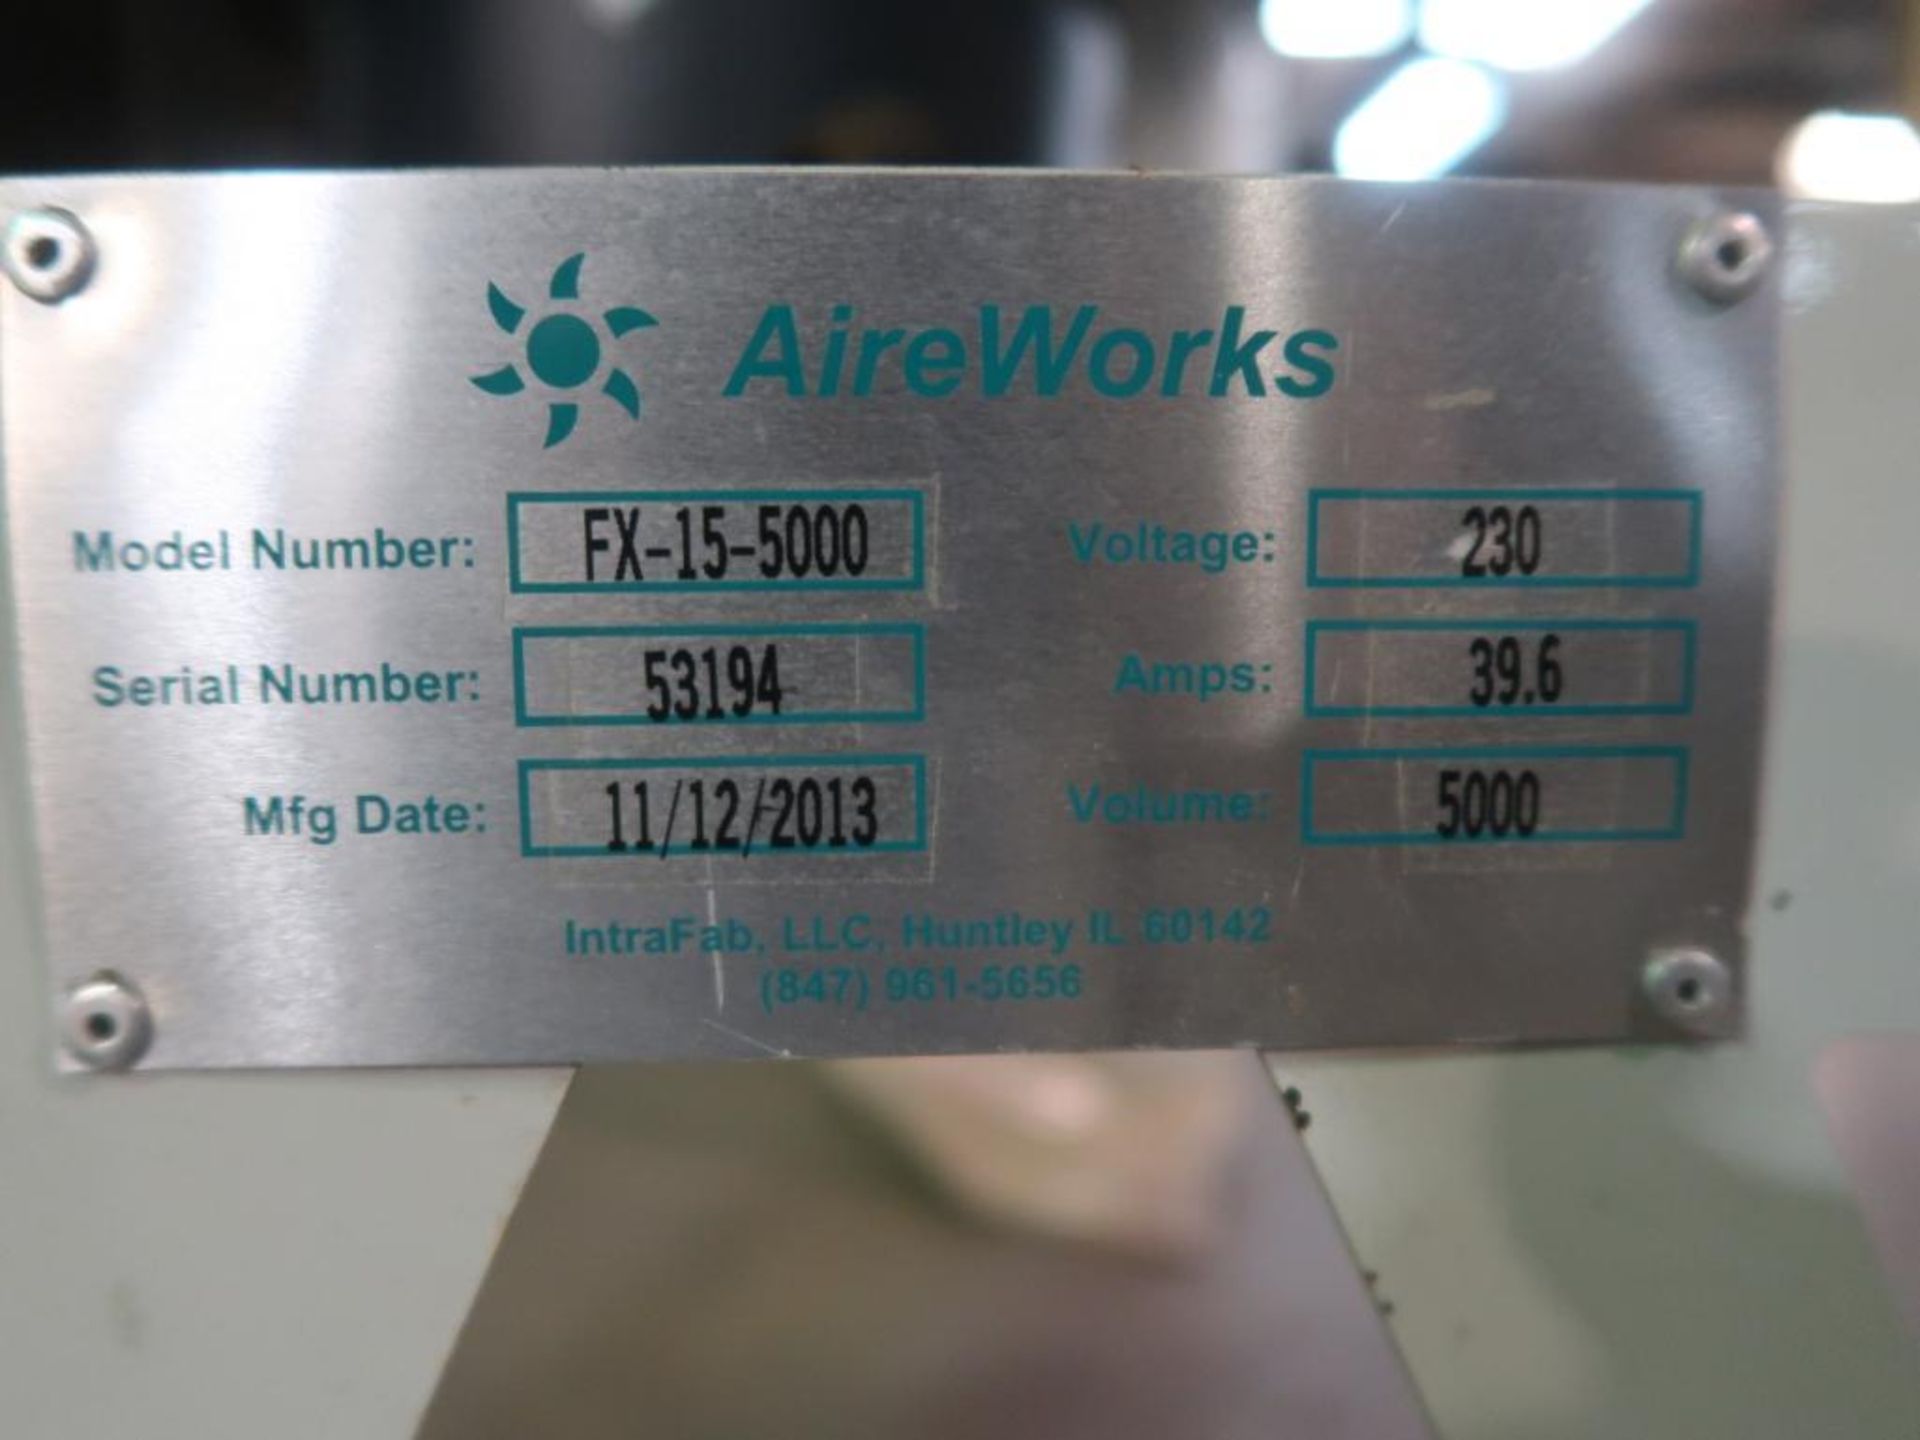 AireWorks 12-Bag Dust Collector Model FX-15-5000, S/N 53194 (2013), 15 HP Leeson Motor - Image 3 of 3